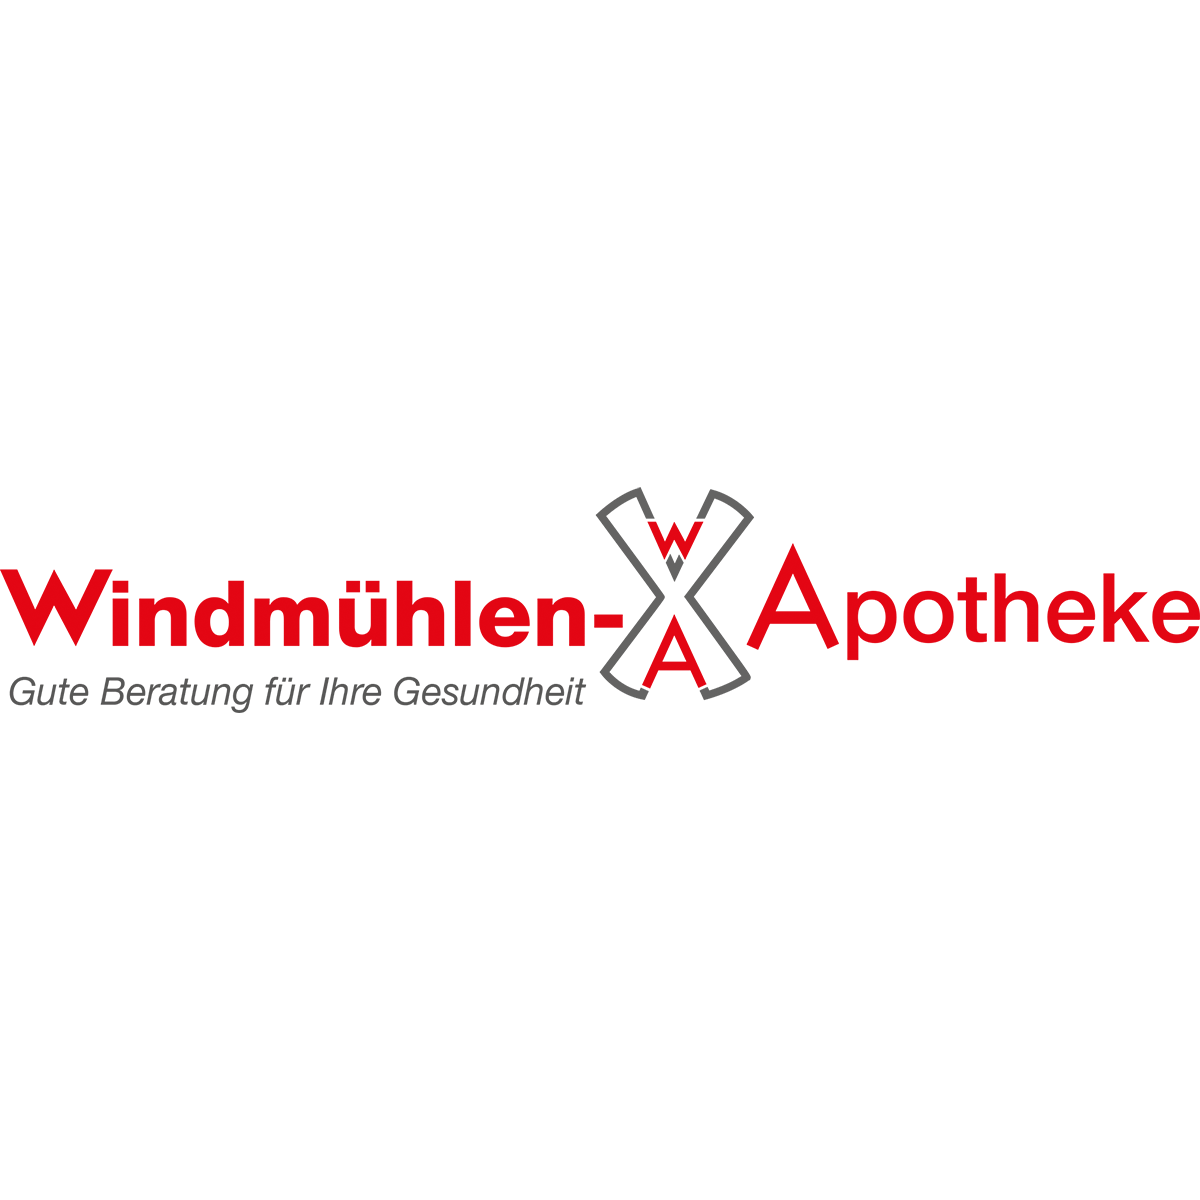 Windmühlen-Apotheke in Köln